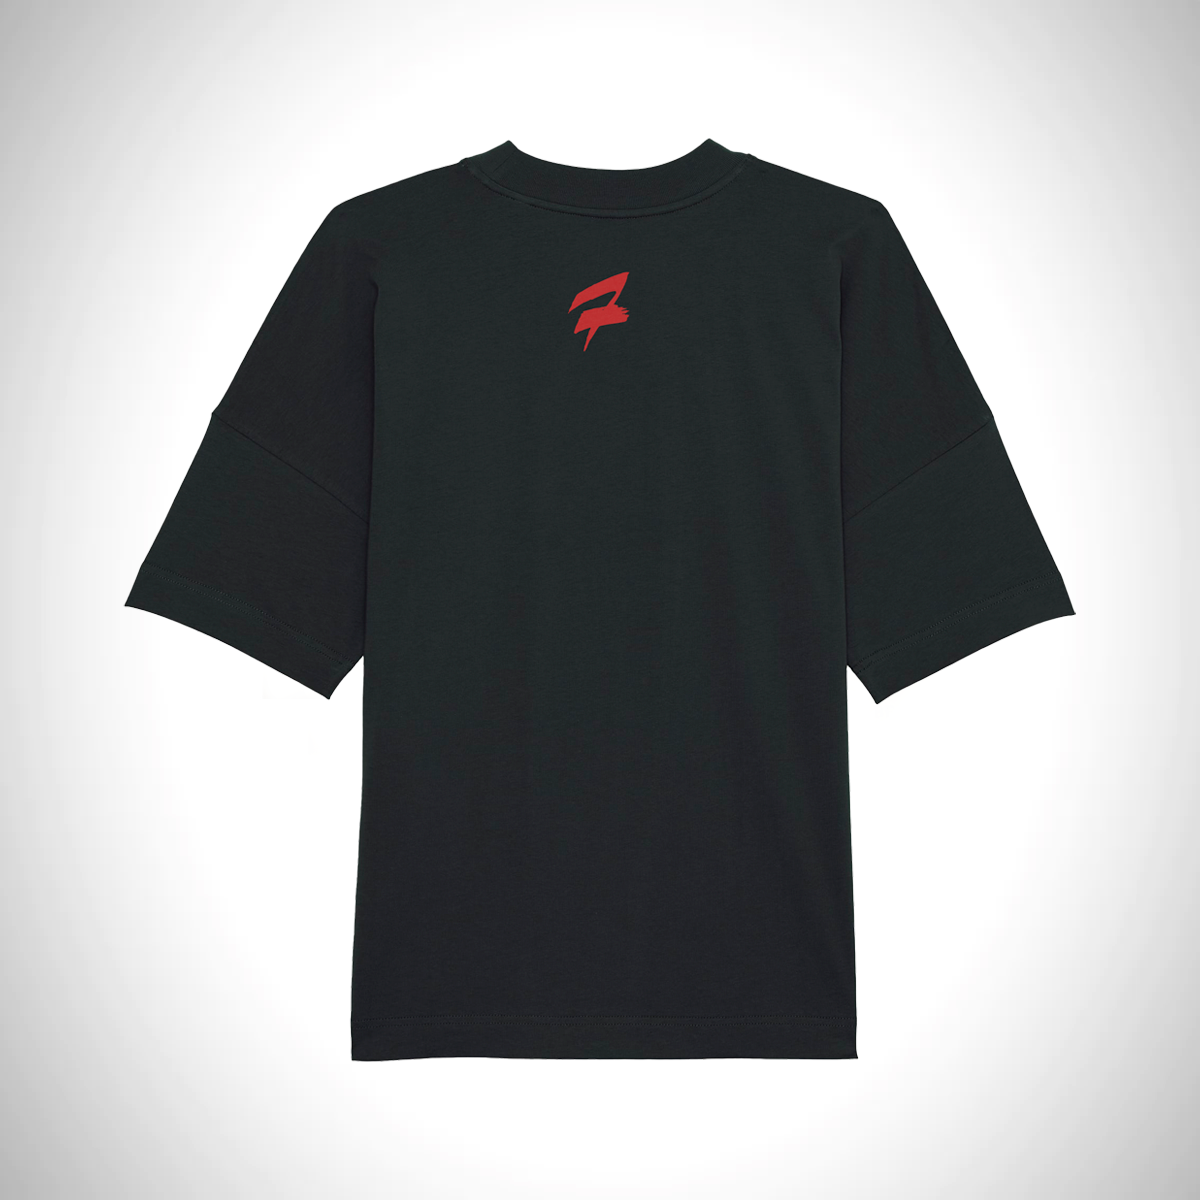 Exclusive Drop 7 T-Shirt (Black)